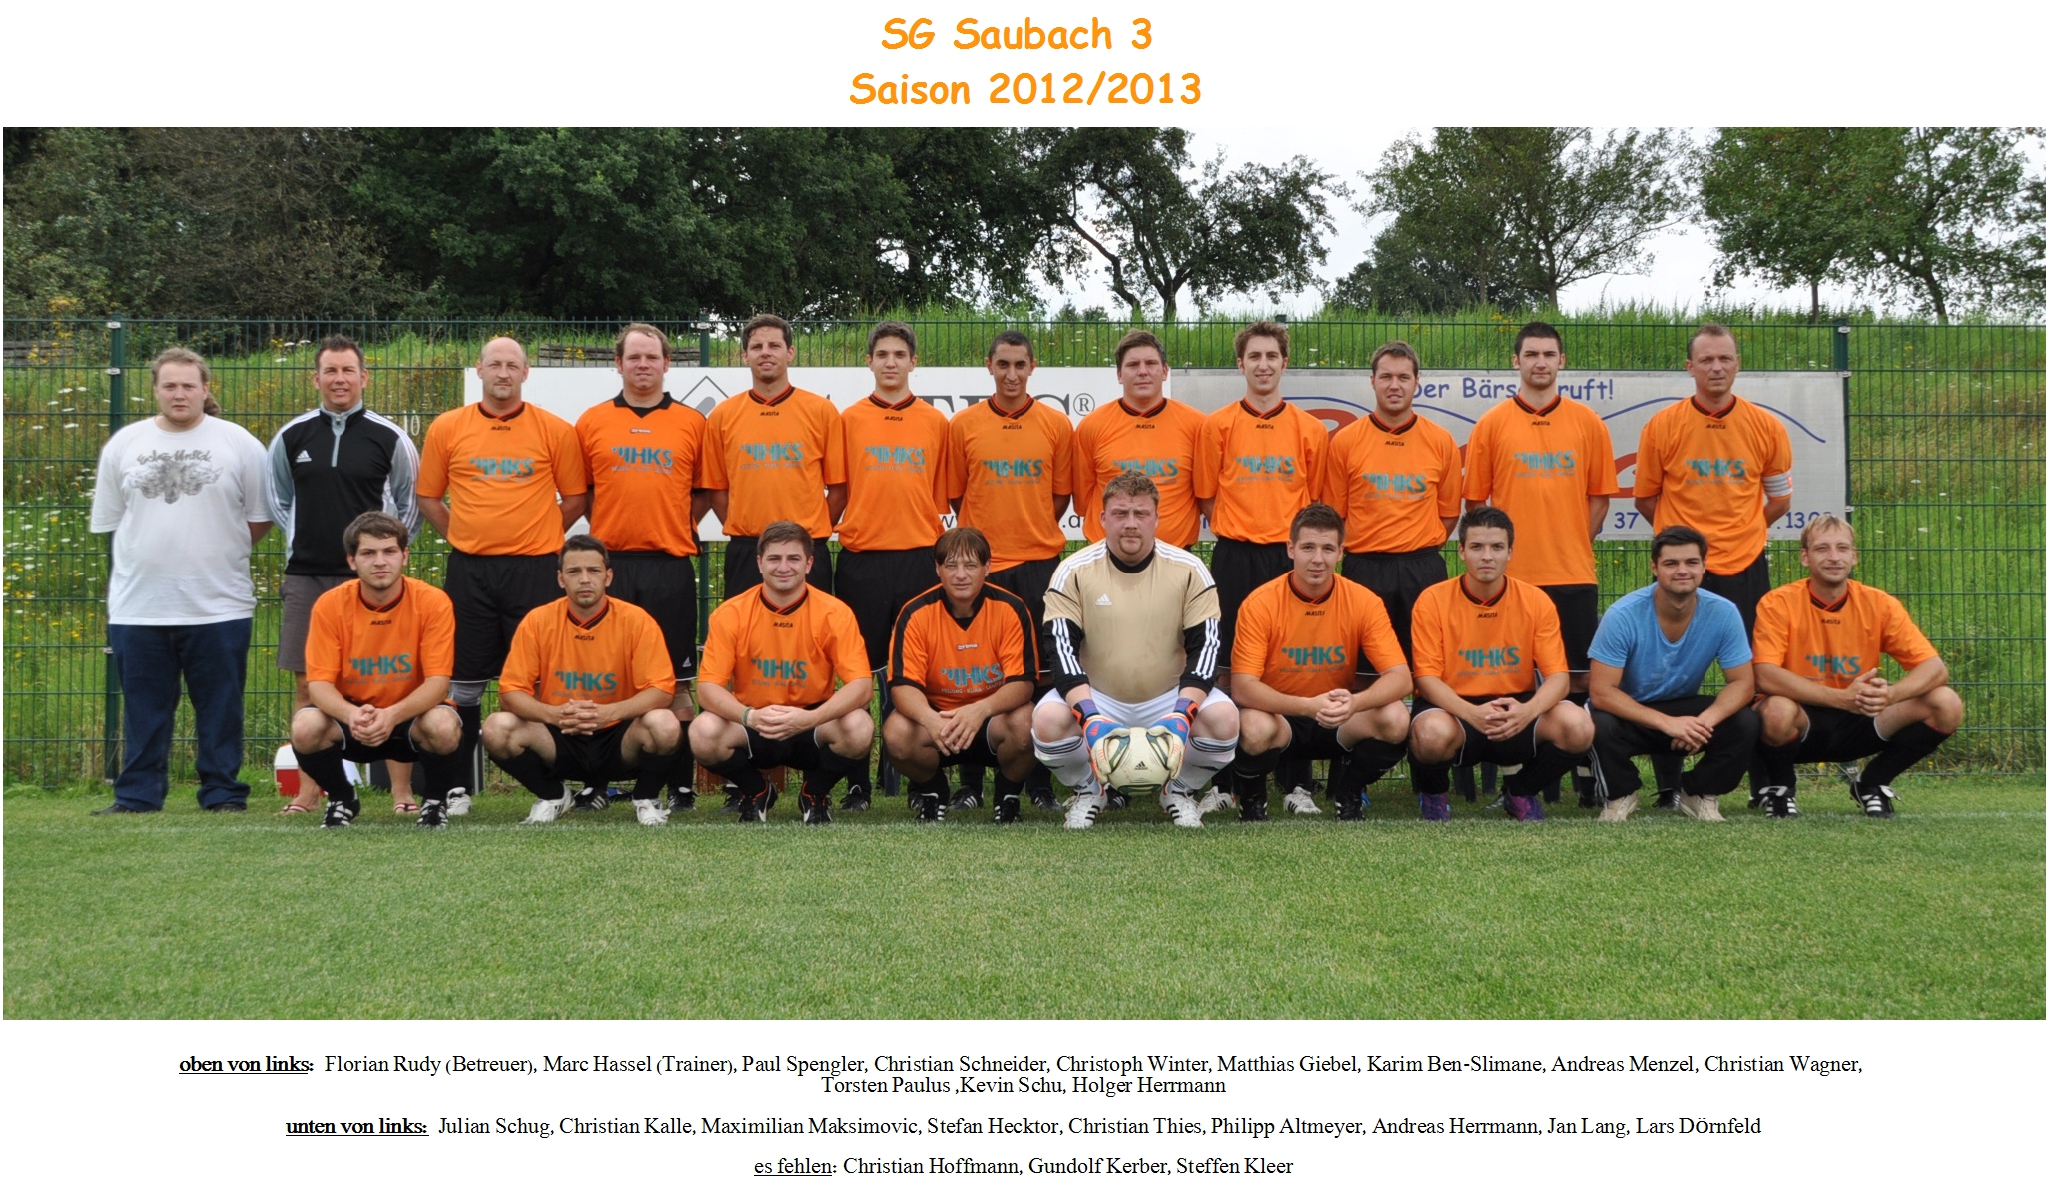 Mannschaftsfoto/Teamfoto von SG Saubach 3: SG Saubach